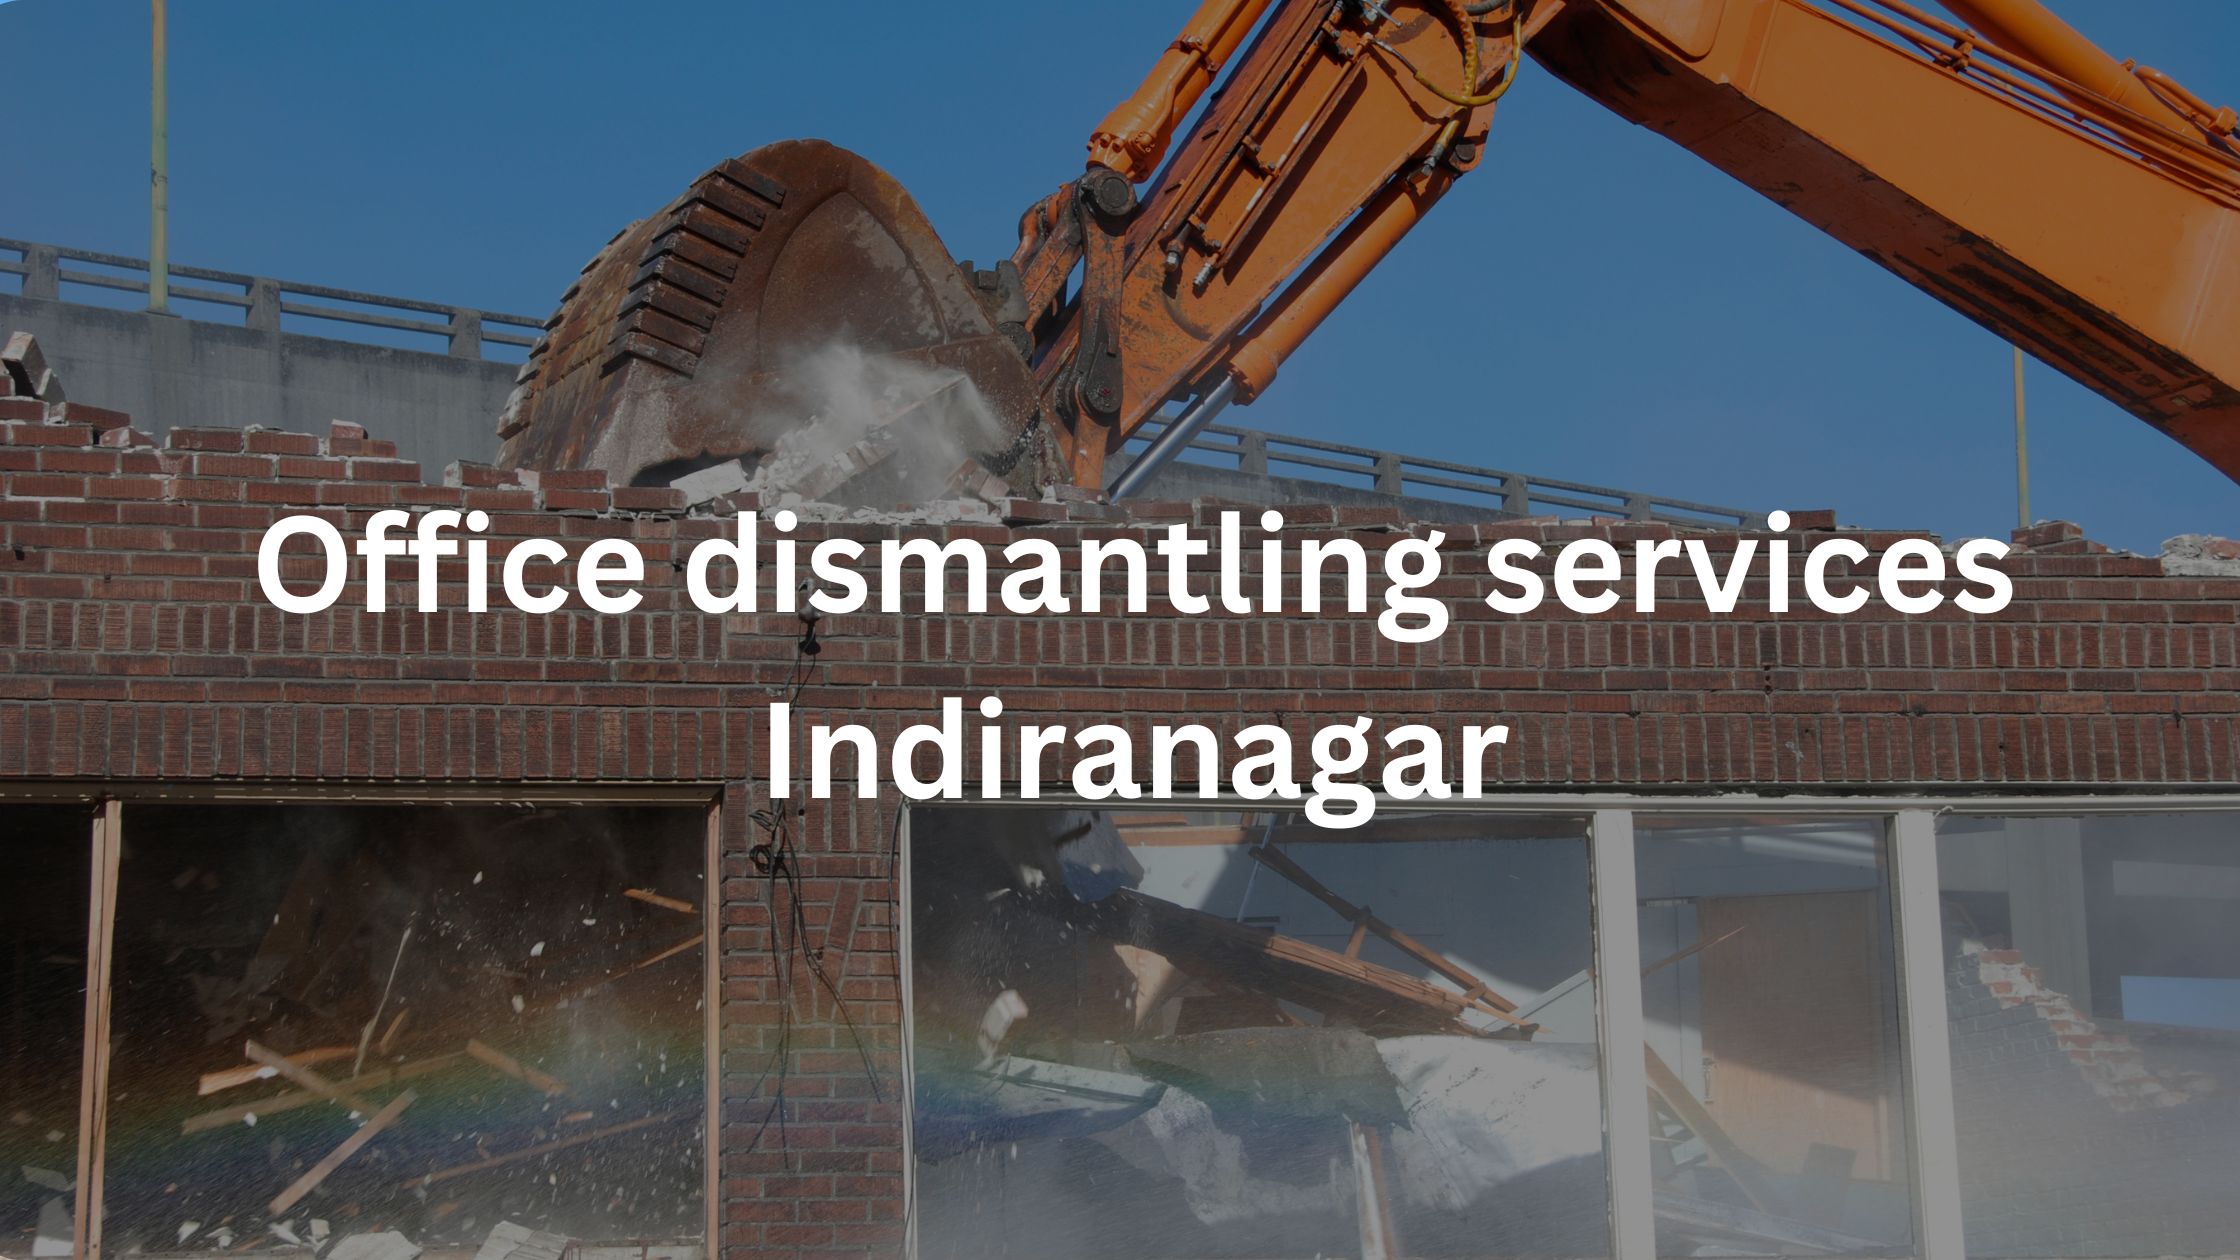 Office dismantling services Indiranagar